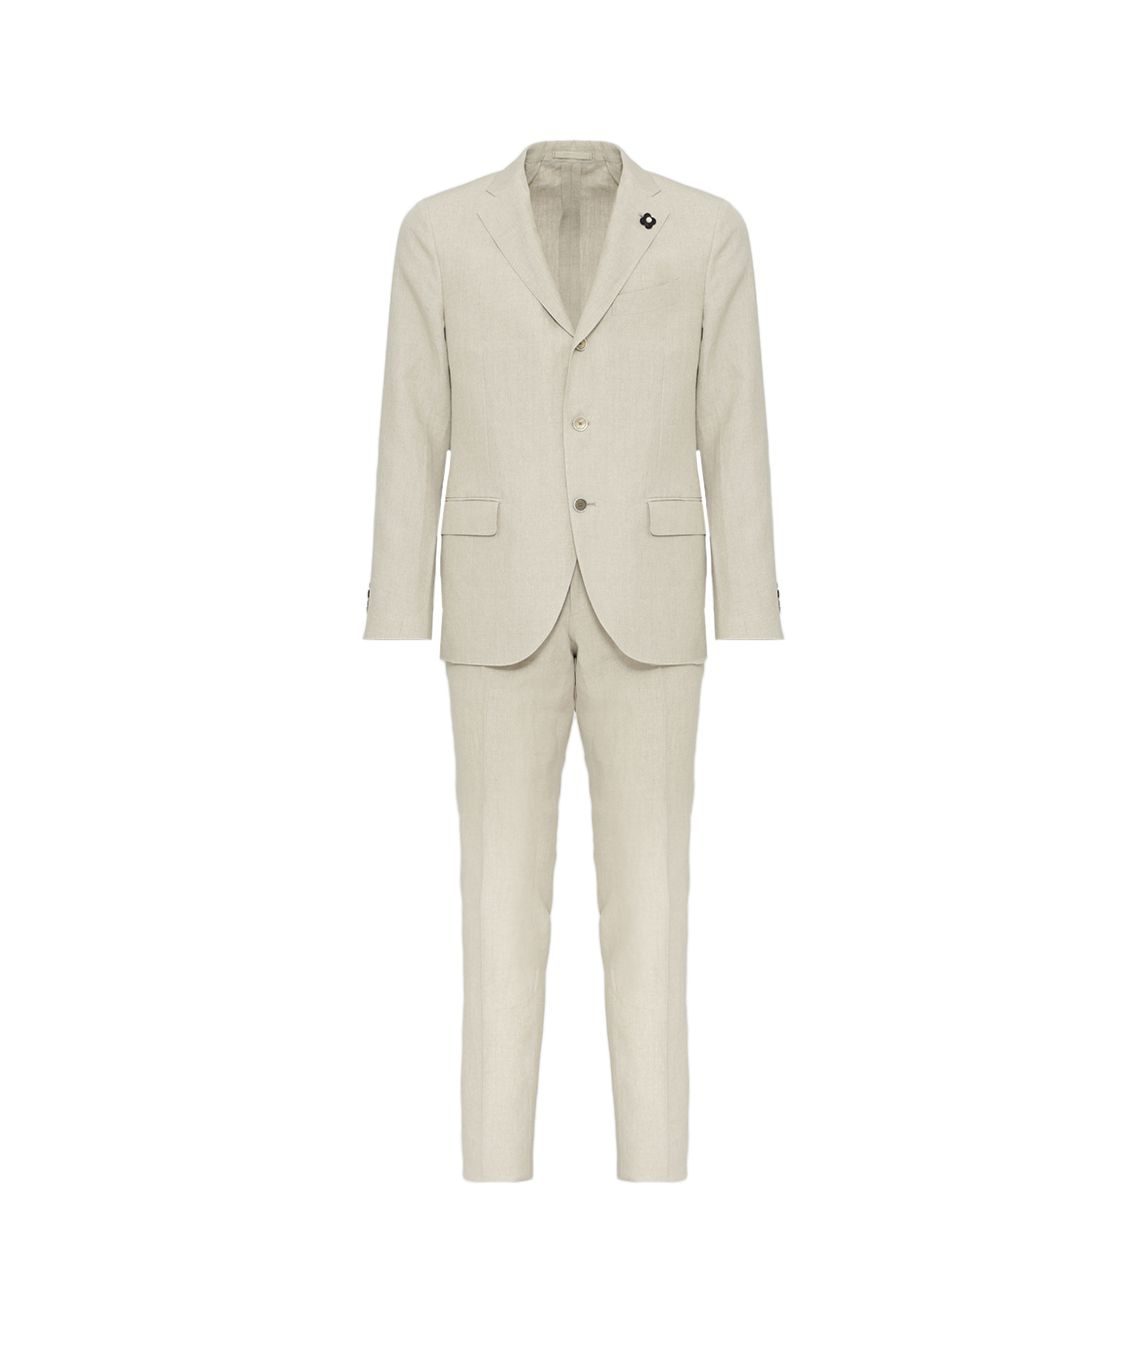 white suit 25 - StyleMann